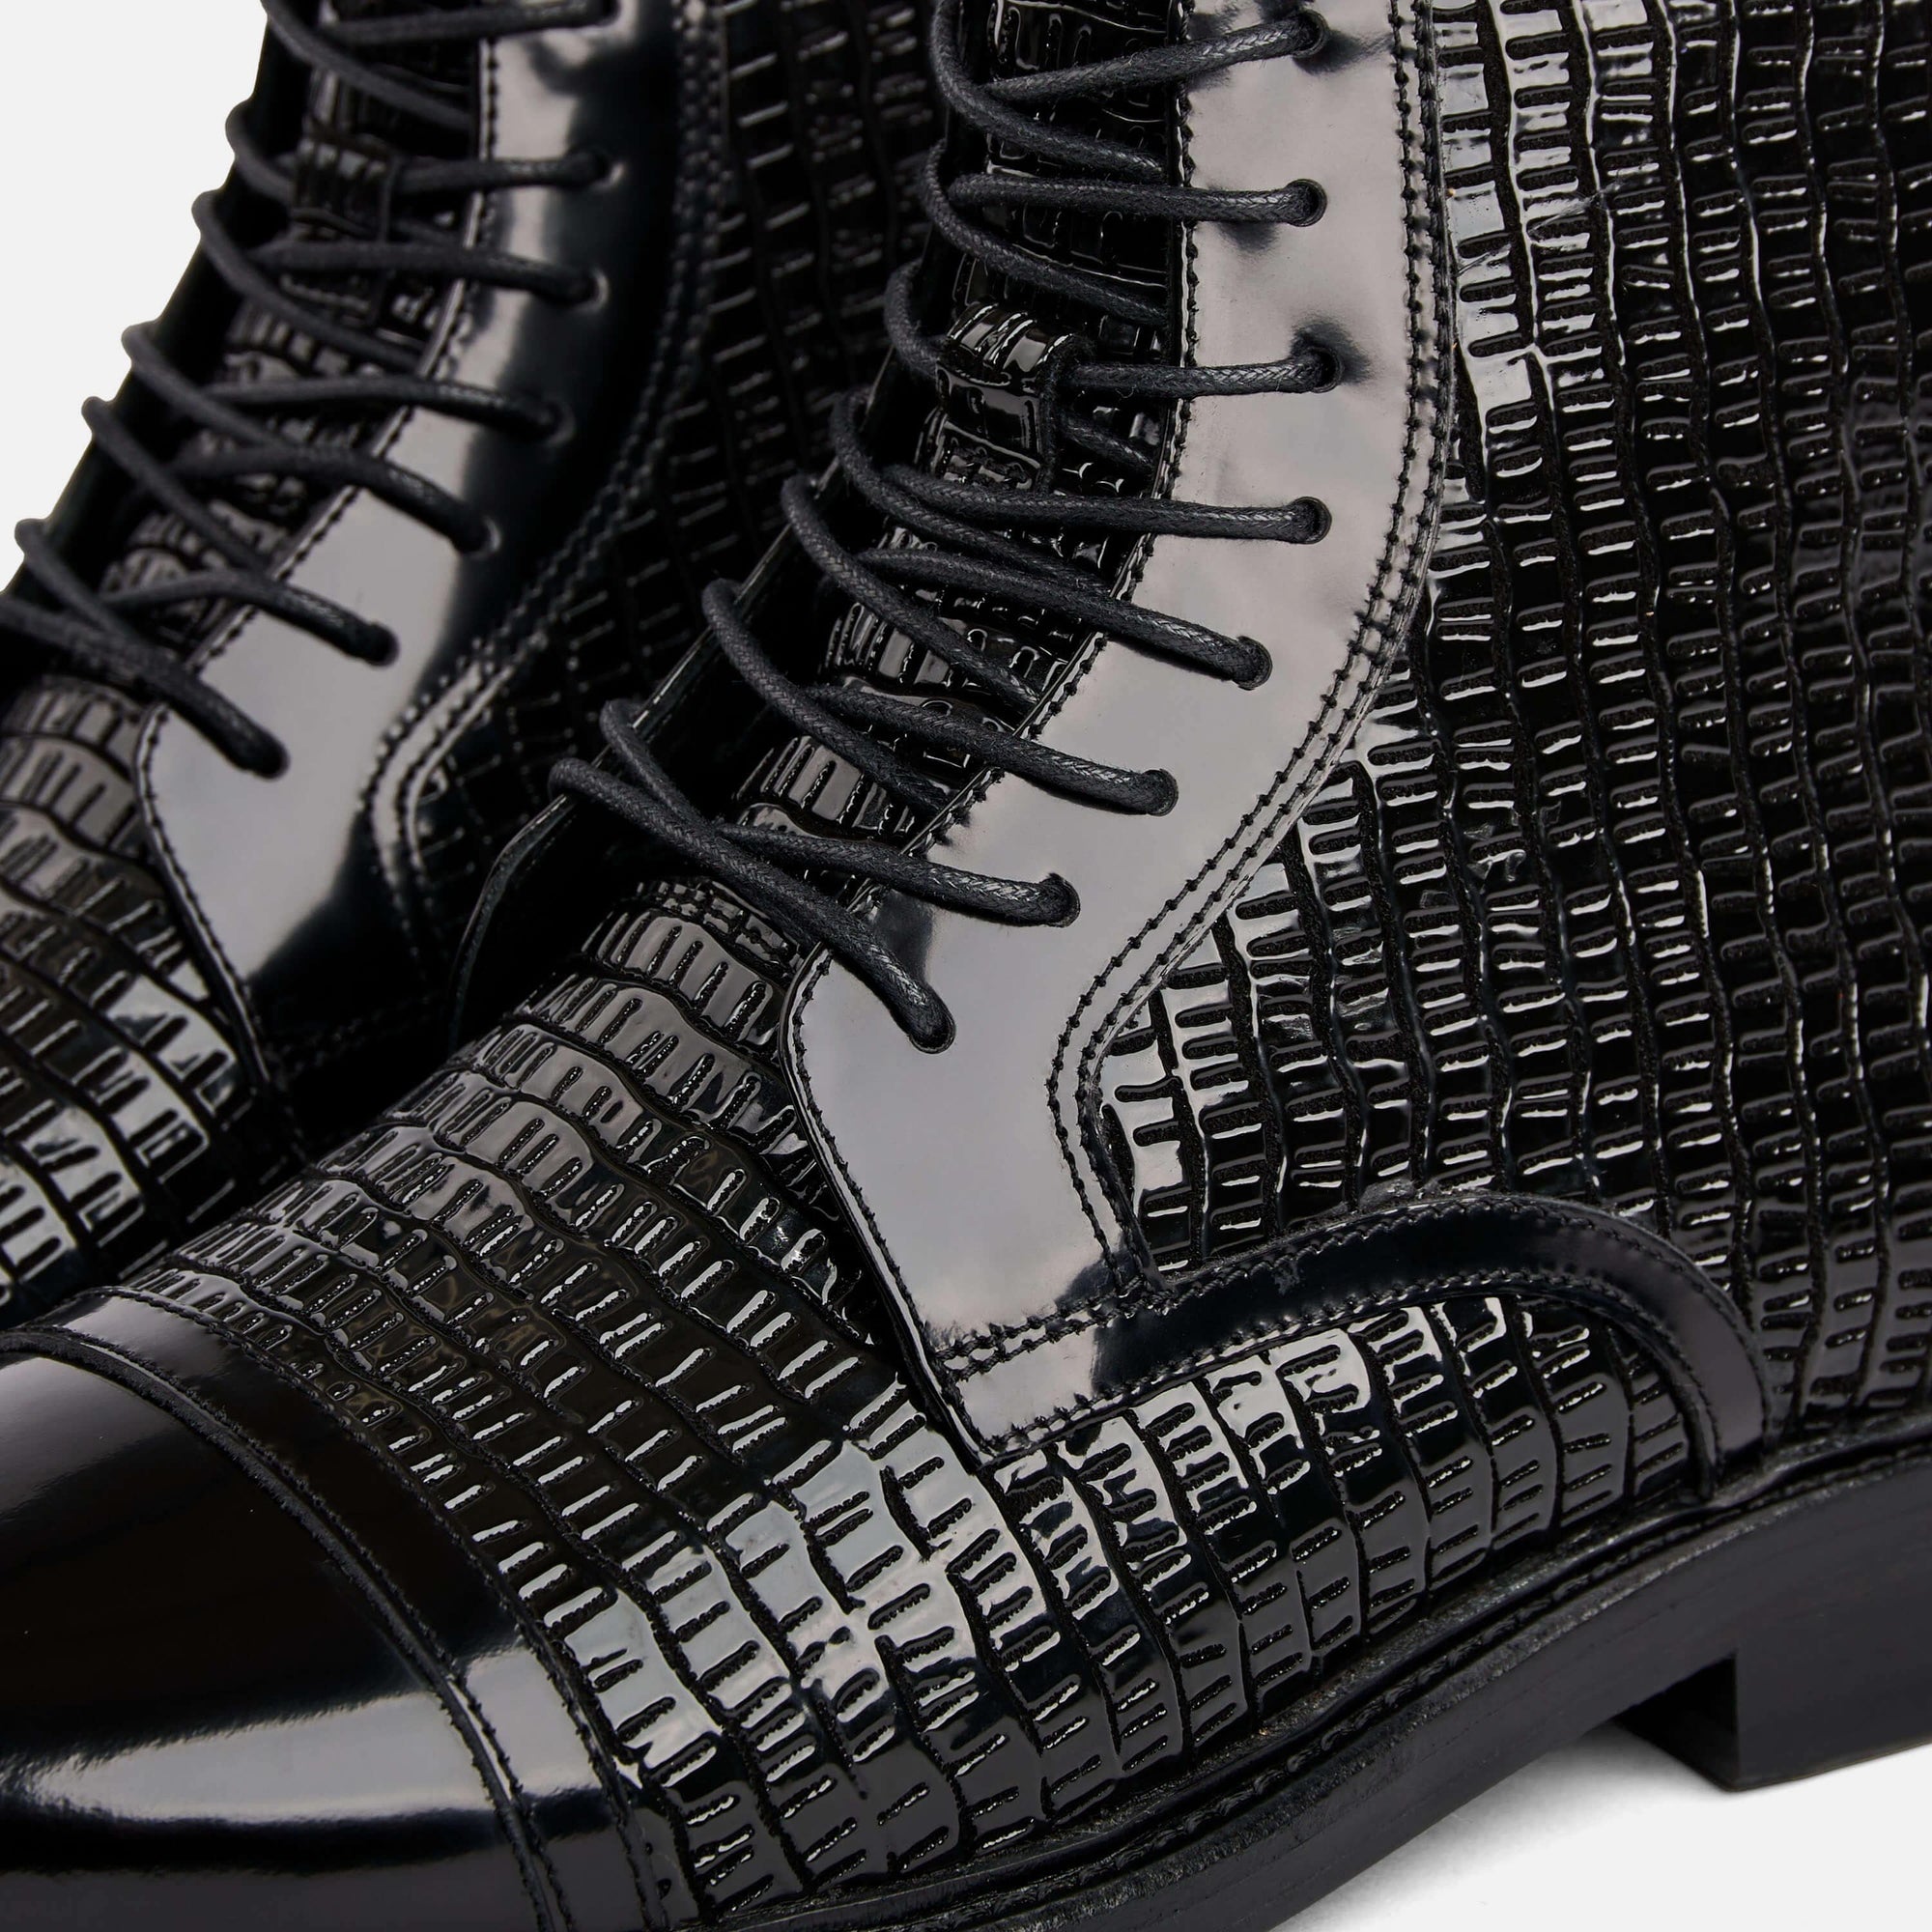 Black Patent Leather Cap Toe Boots